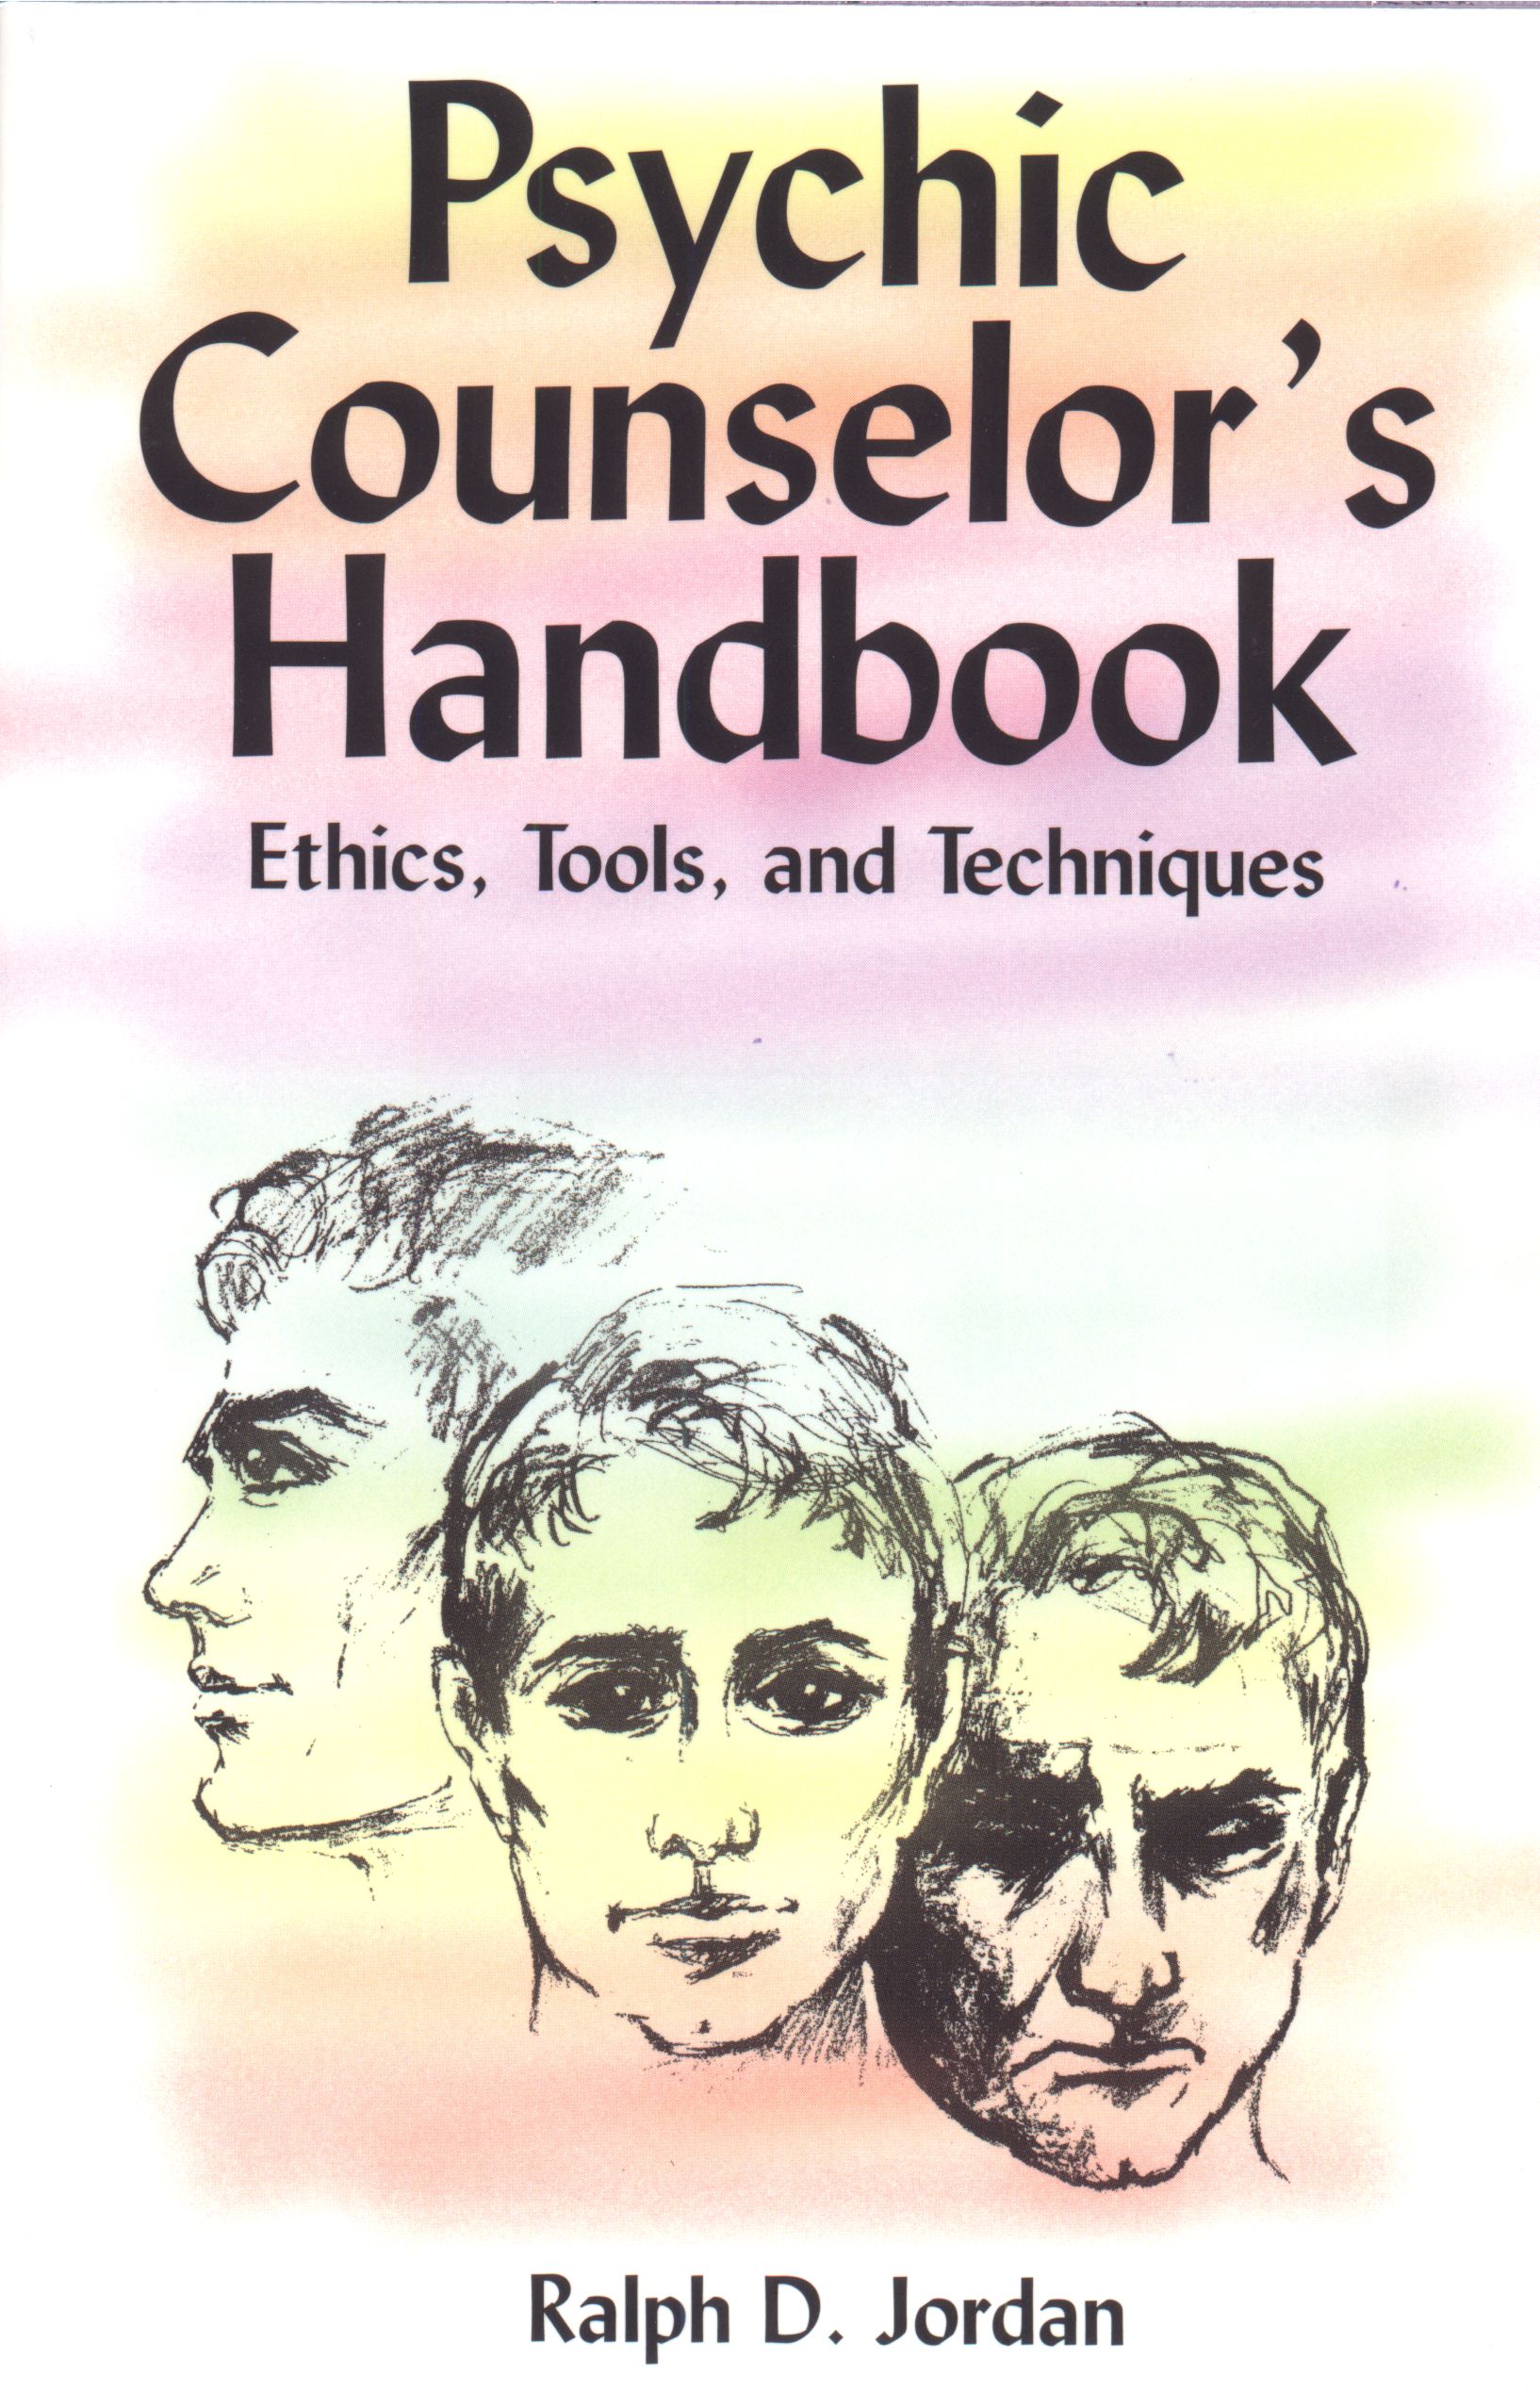 Psychic Counselor's Handbook, Ethics, Tools and Techniques, Ralph D. Jordan